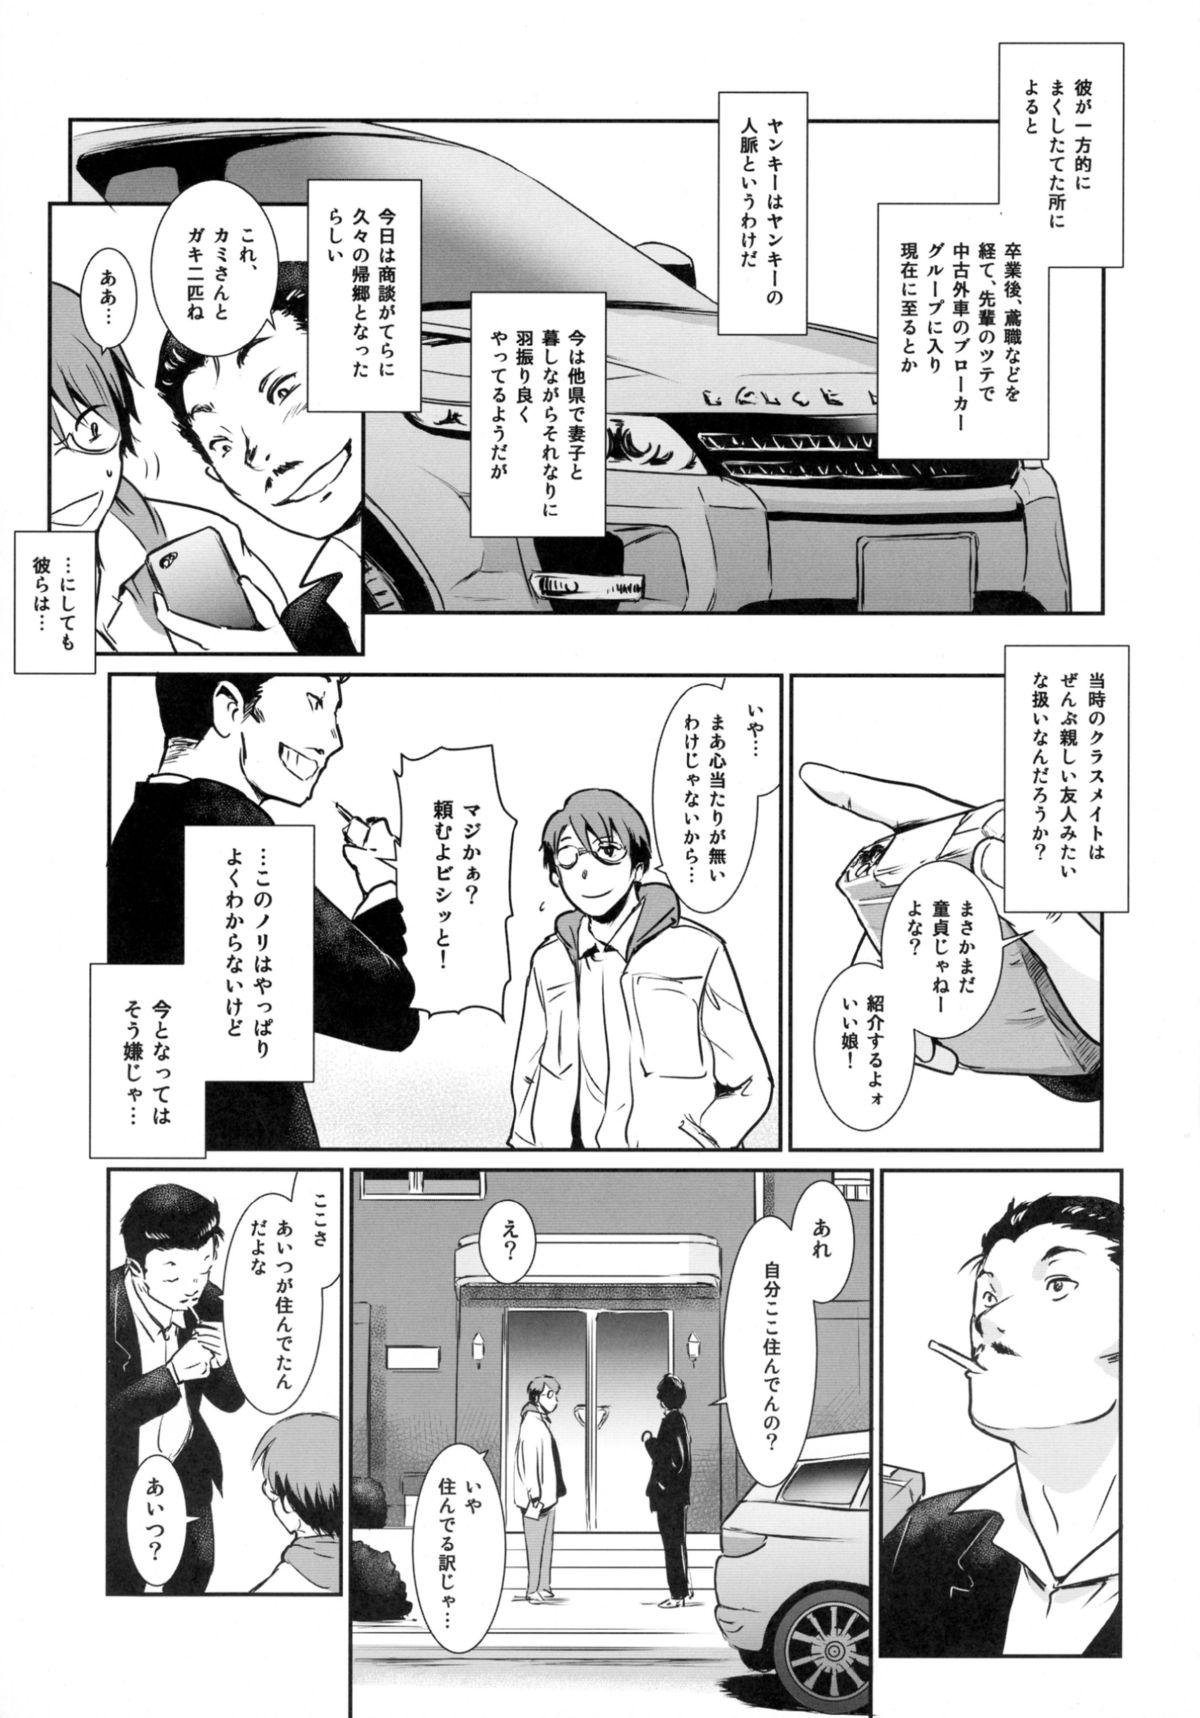 Story of the 'N' Situation - Situation#3 Mukashi no Otoko 16